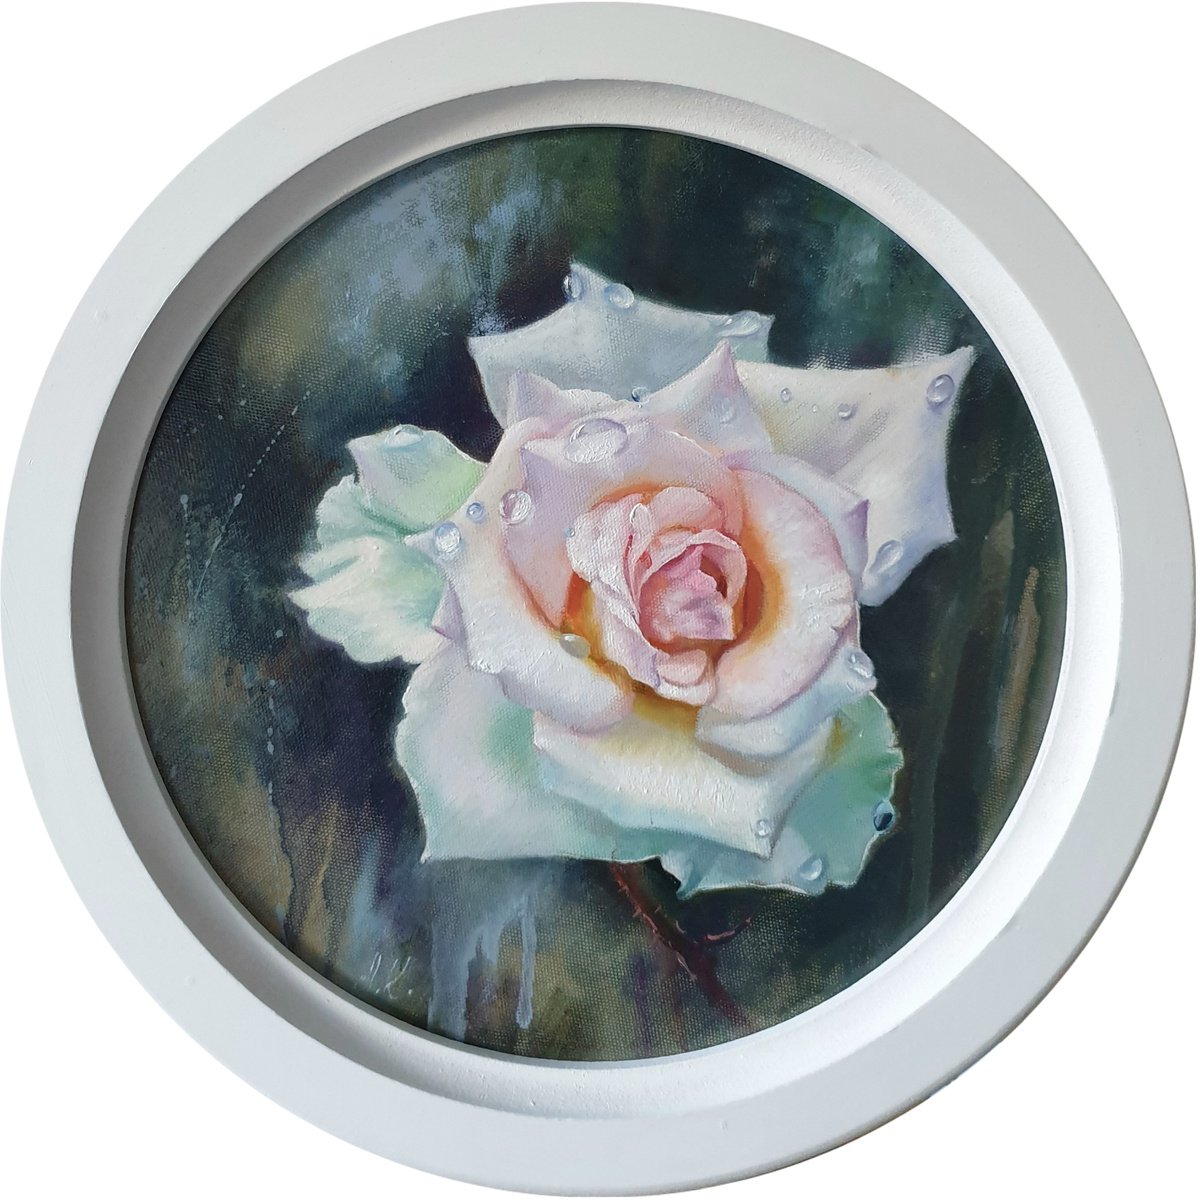 Dew and rose. rose flower liGHt original painting GIFT (2020) by Anna Kotelnik